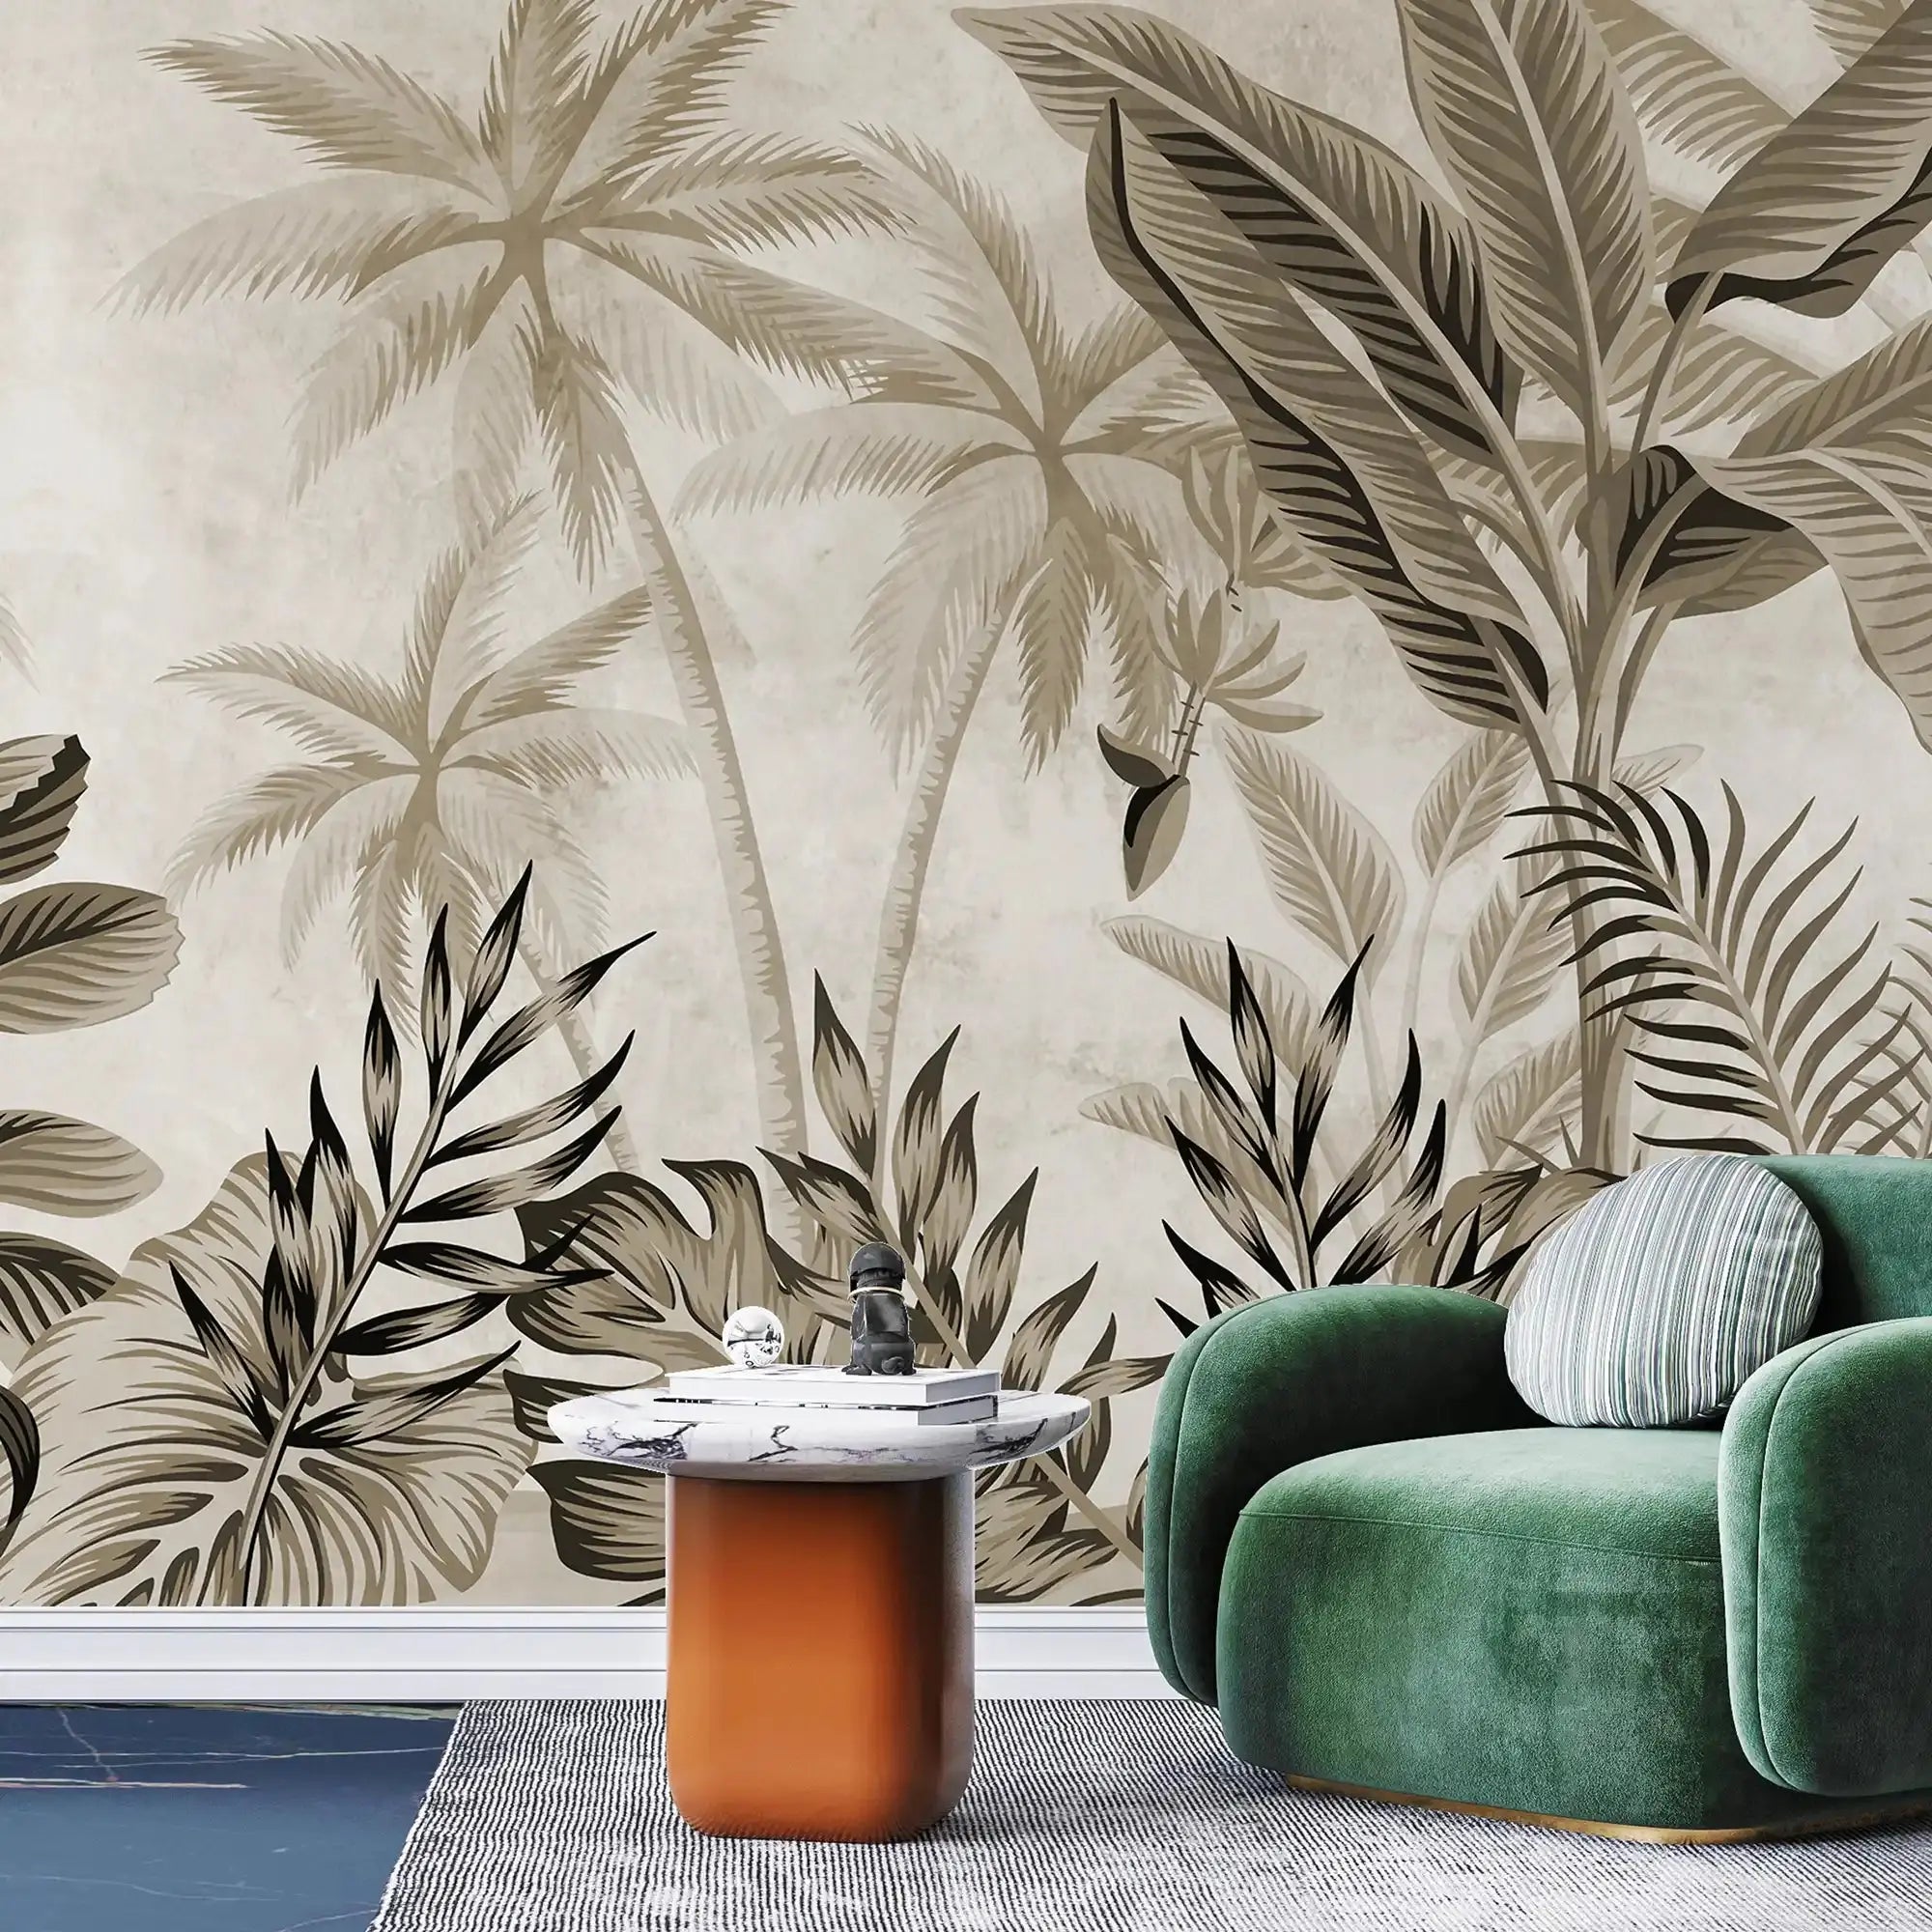 3100-C / Tropical Jungle Peel and Stick Wallpaper, Modern Palm Tree Design, Adhesive Wall Decor for Bedroom, Living Room, Bathroom - Artevella